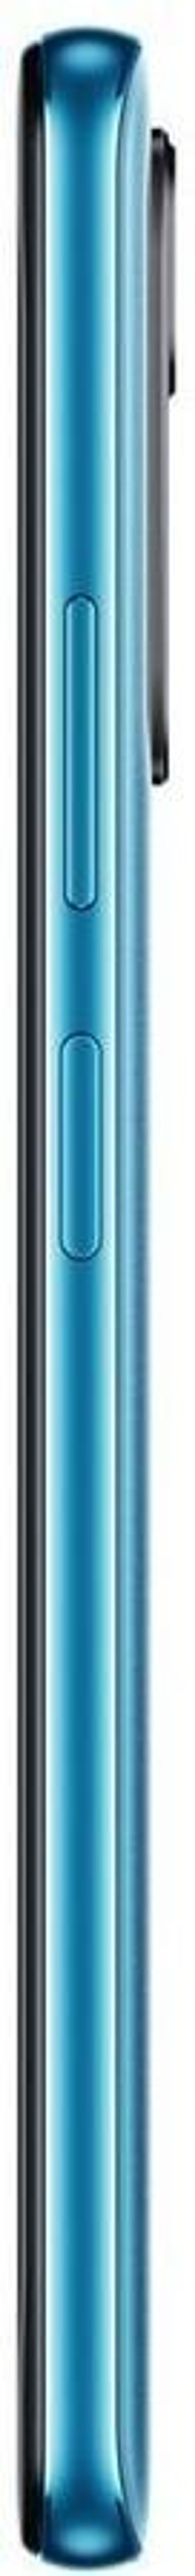 Смартфон Poco M4 Pro 5G 4/64GB Cool Blue